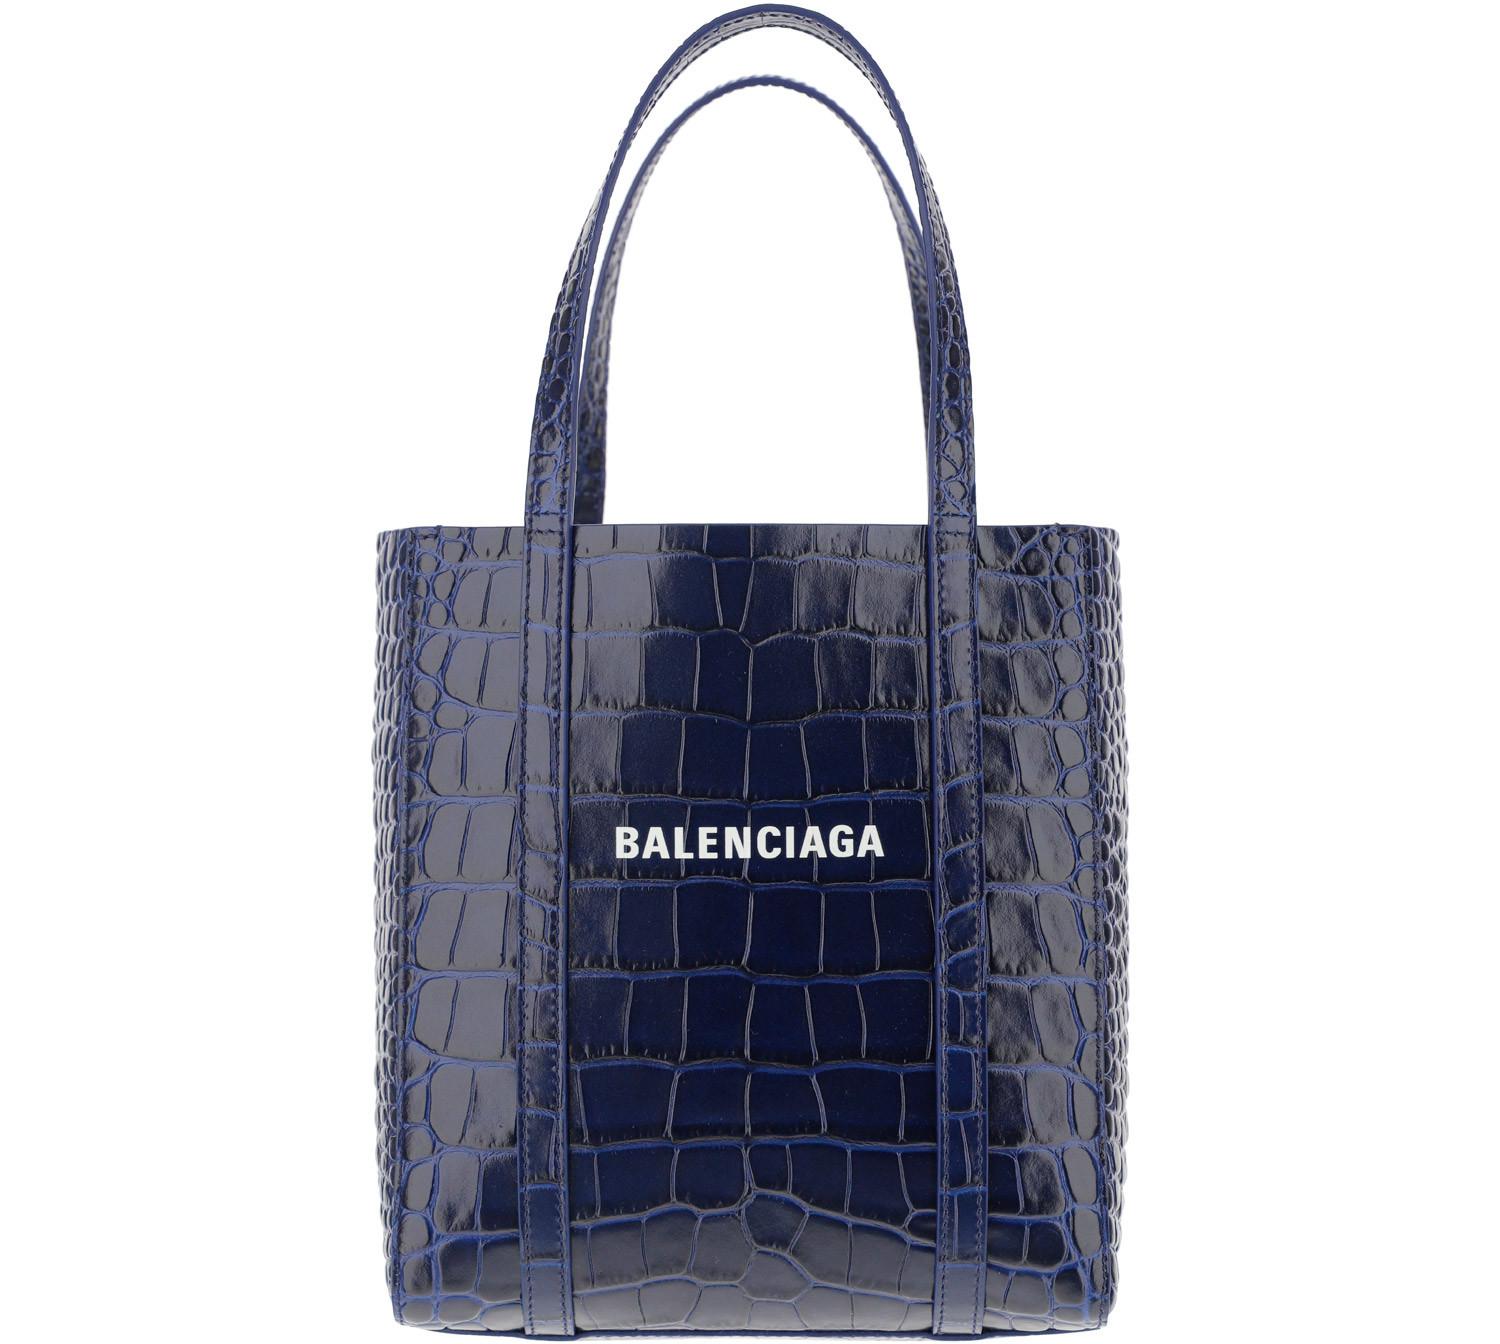 Balenciaga Blue Croco Embossed Tote Bag at FORZIERI